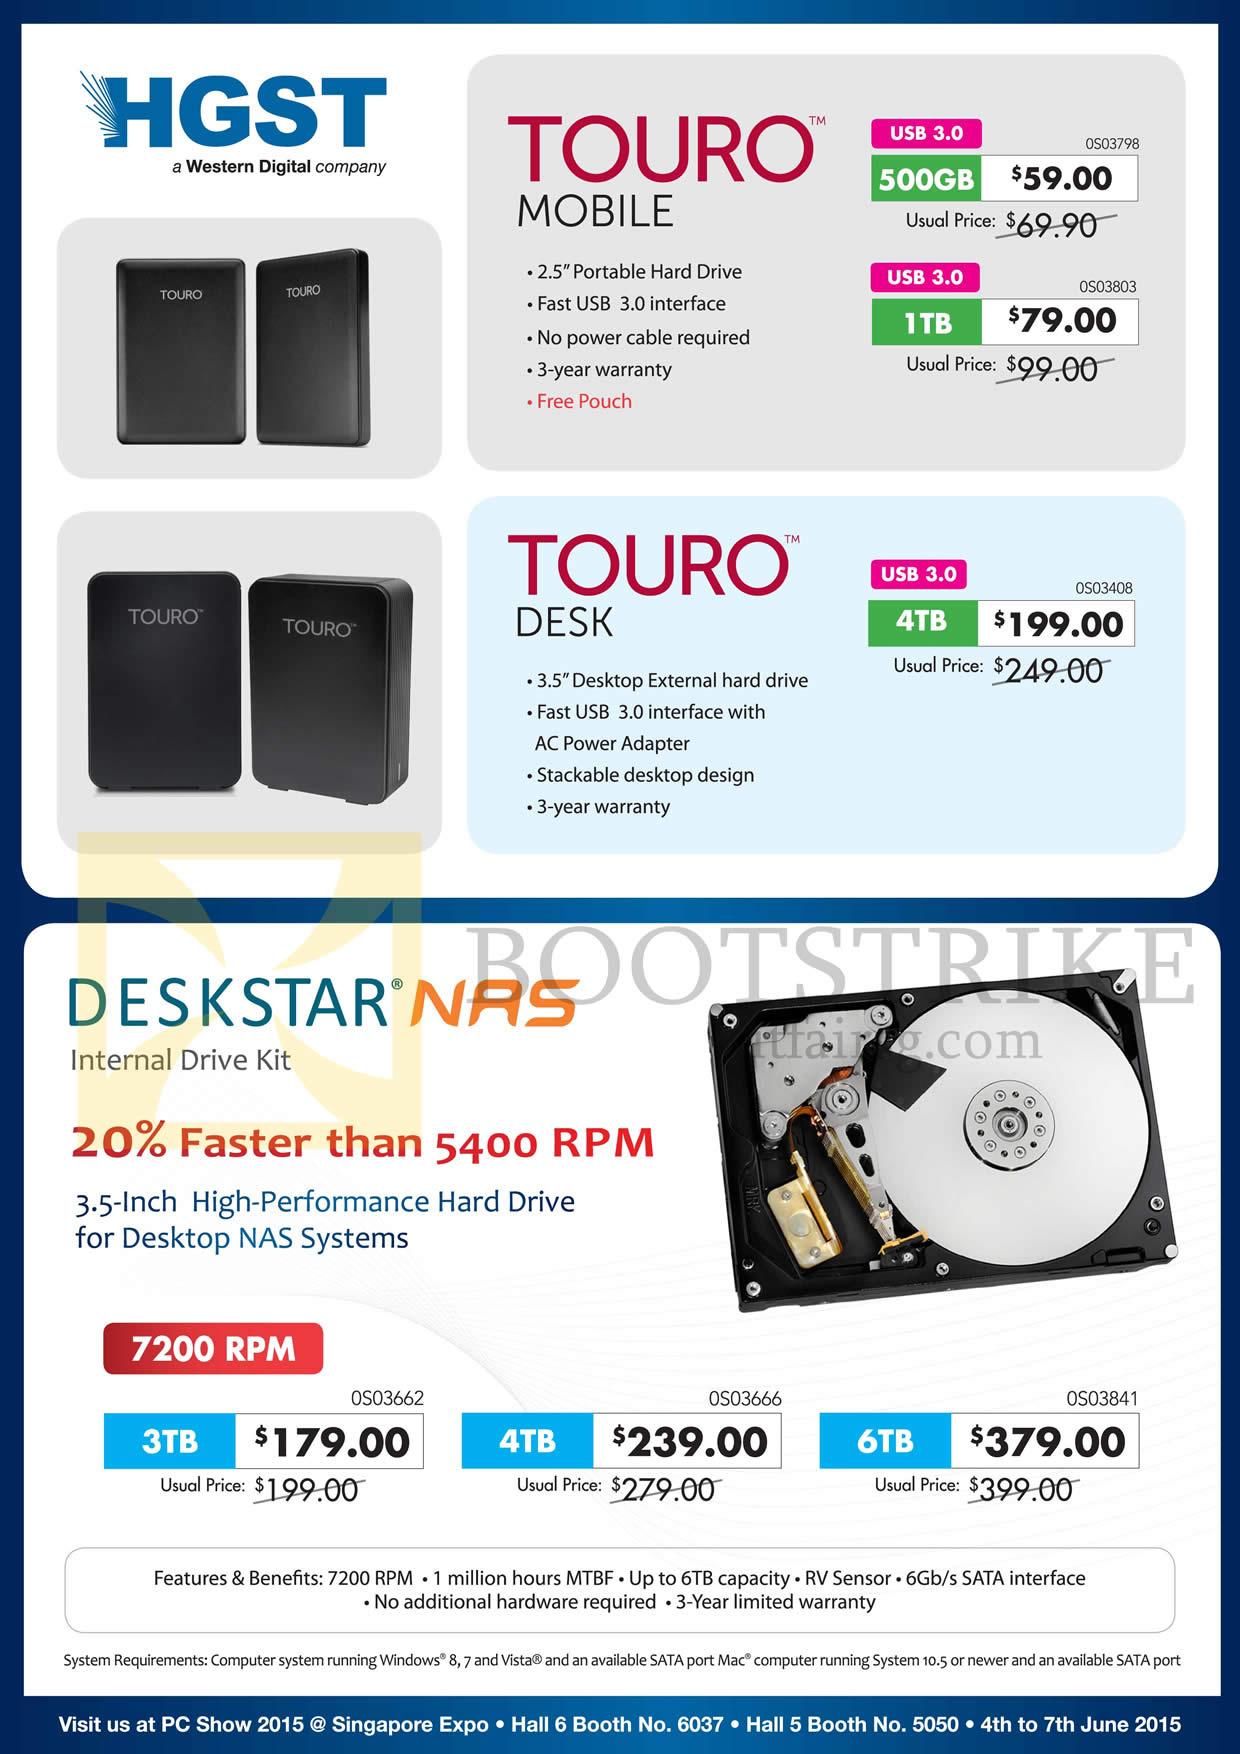 PC SHOW 2015 price list image brochure of HGST Hard Disk Drives, NAS, Touro Mobile, Touro Desk, Deskstar NAS 500GB, 1TB, 3TB, 4TB, 6TB